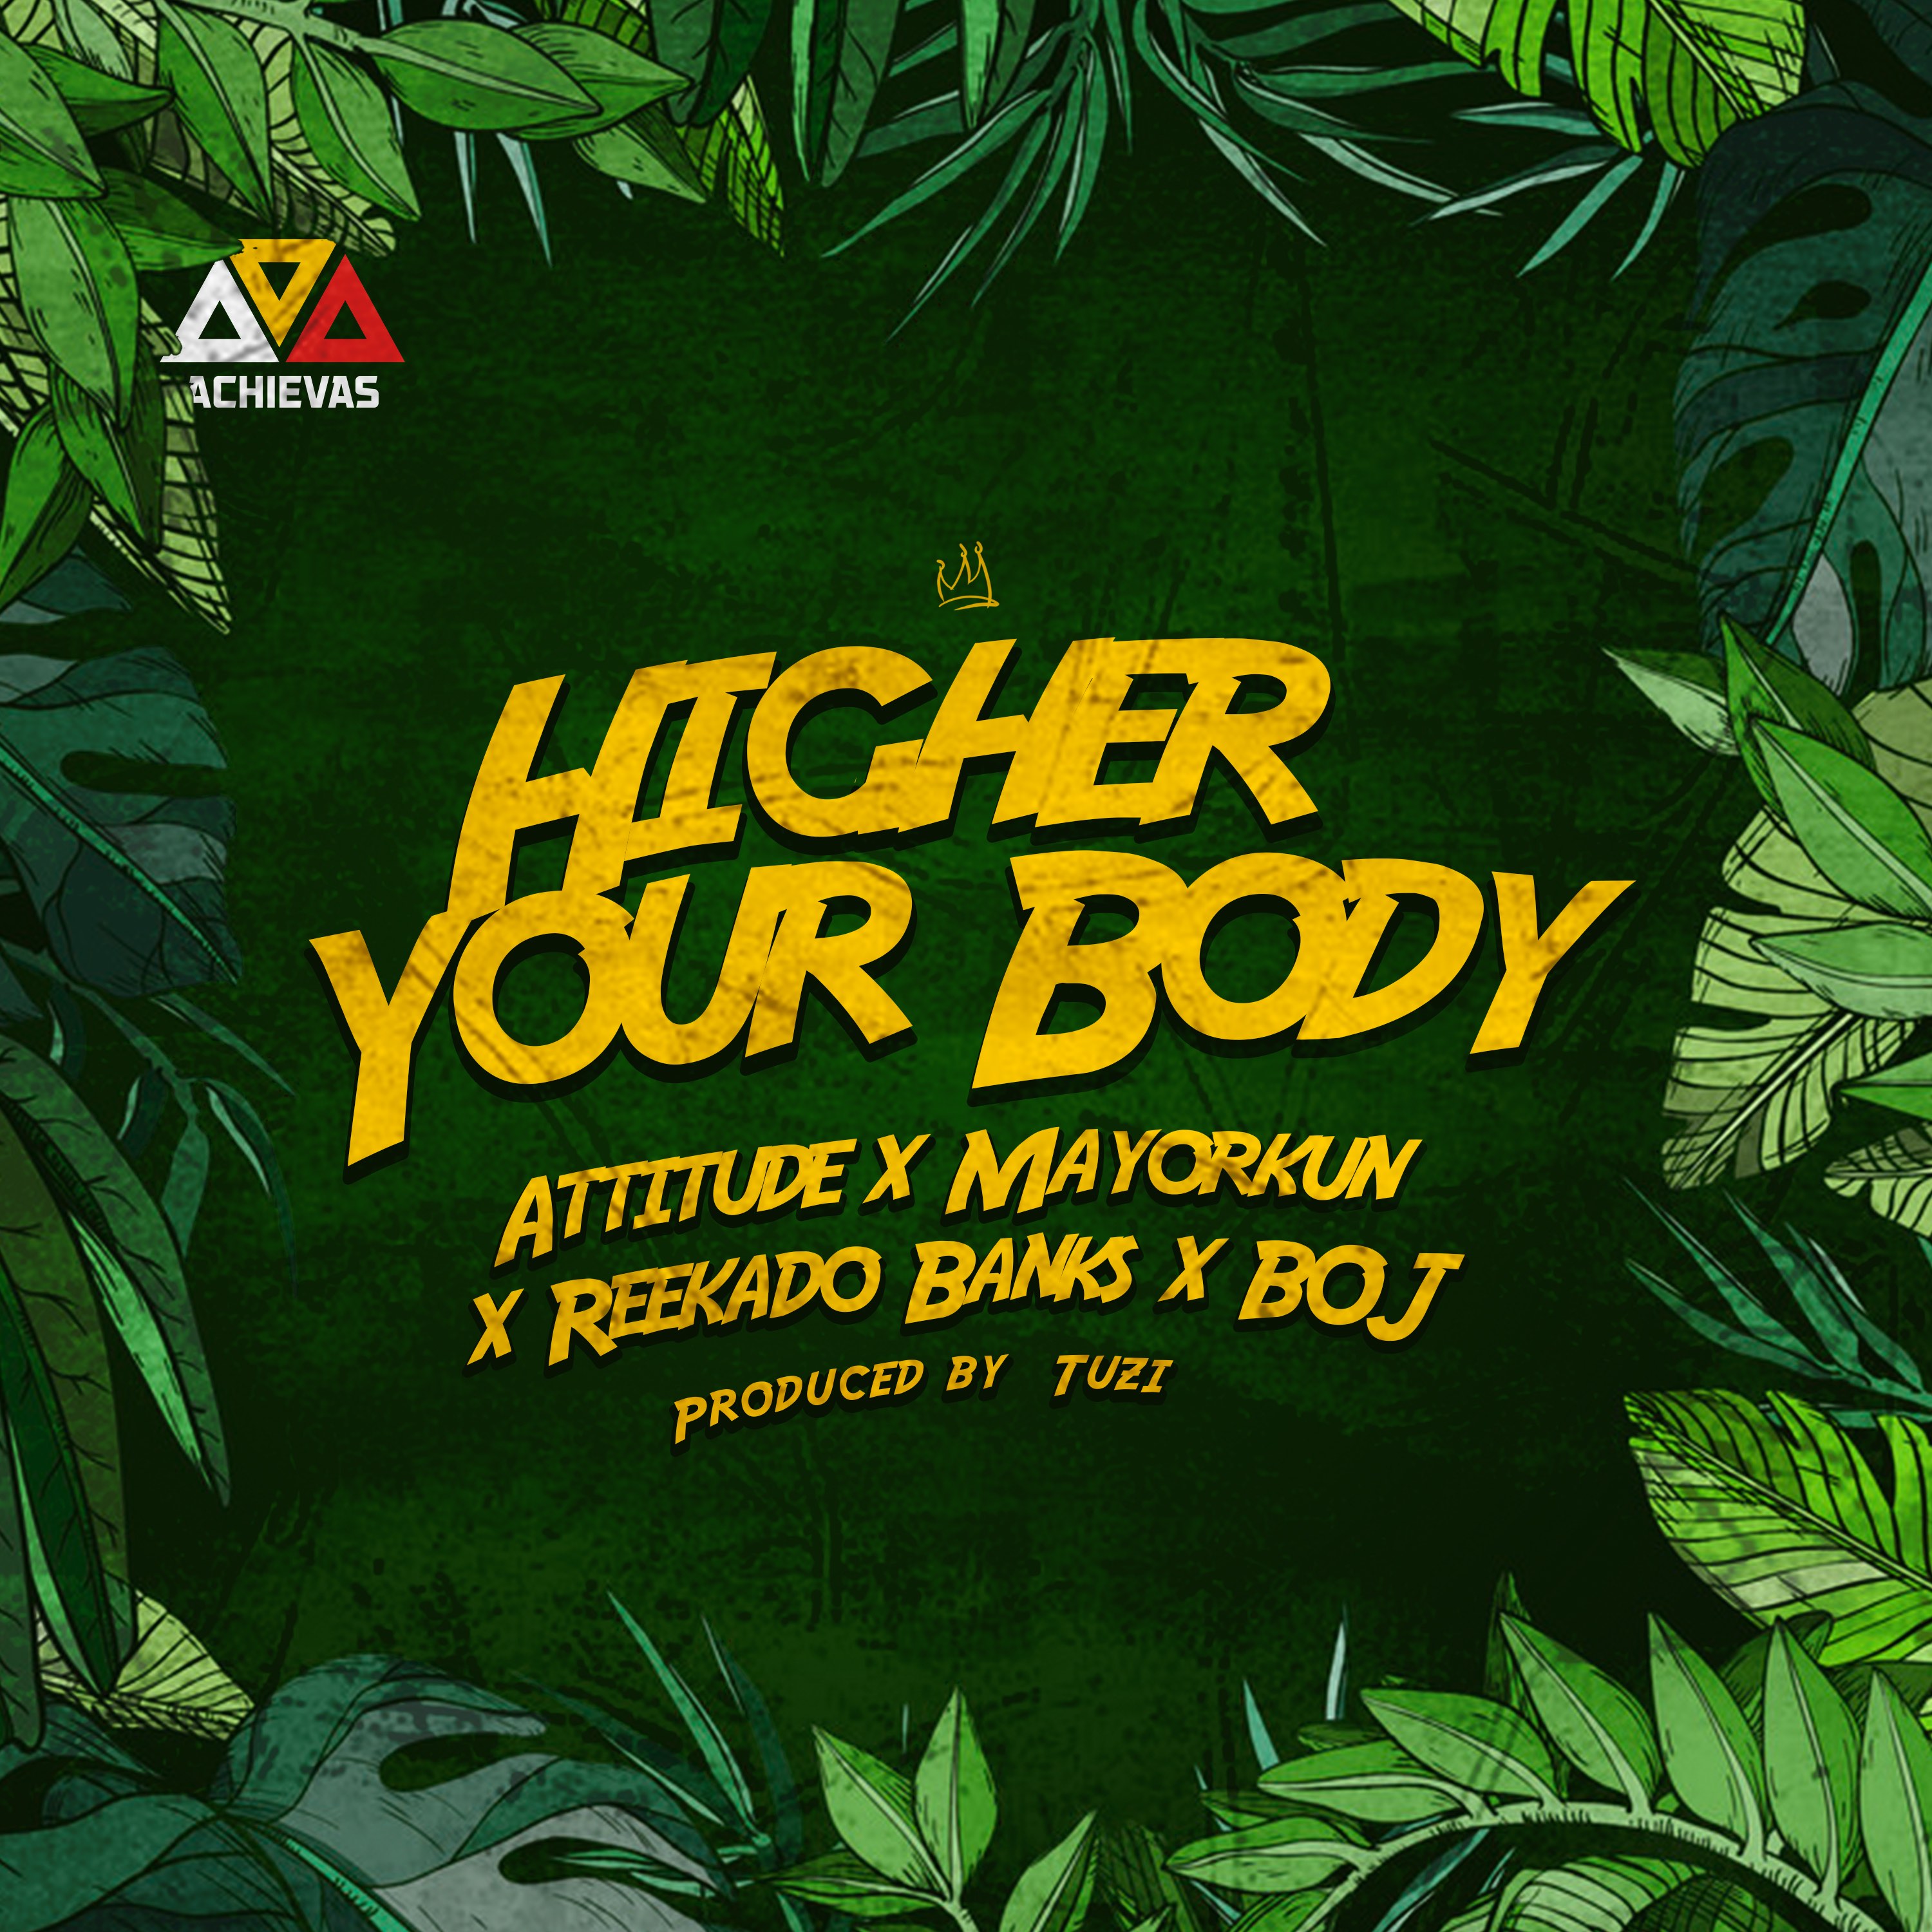 24Naija Music: Listen to Higher Your Body by Attitude featuring Mayorkun, Reekado Banks & BOJ